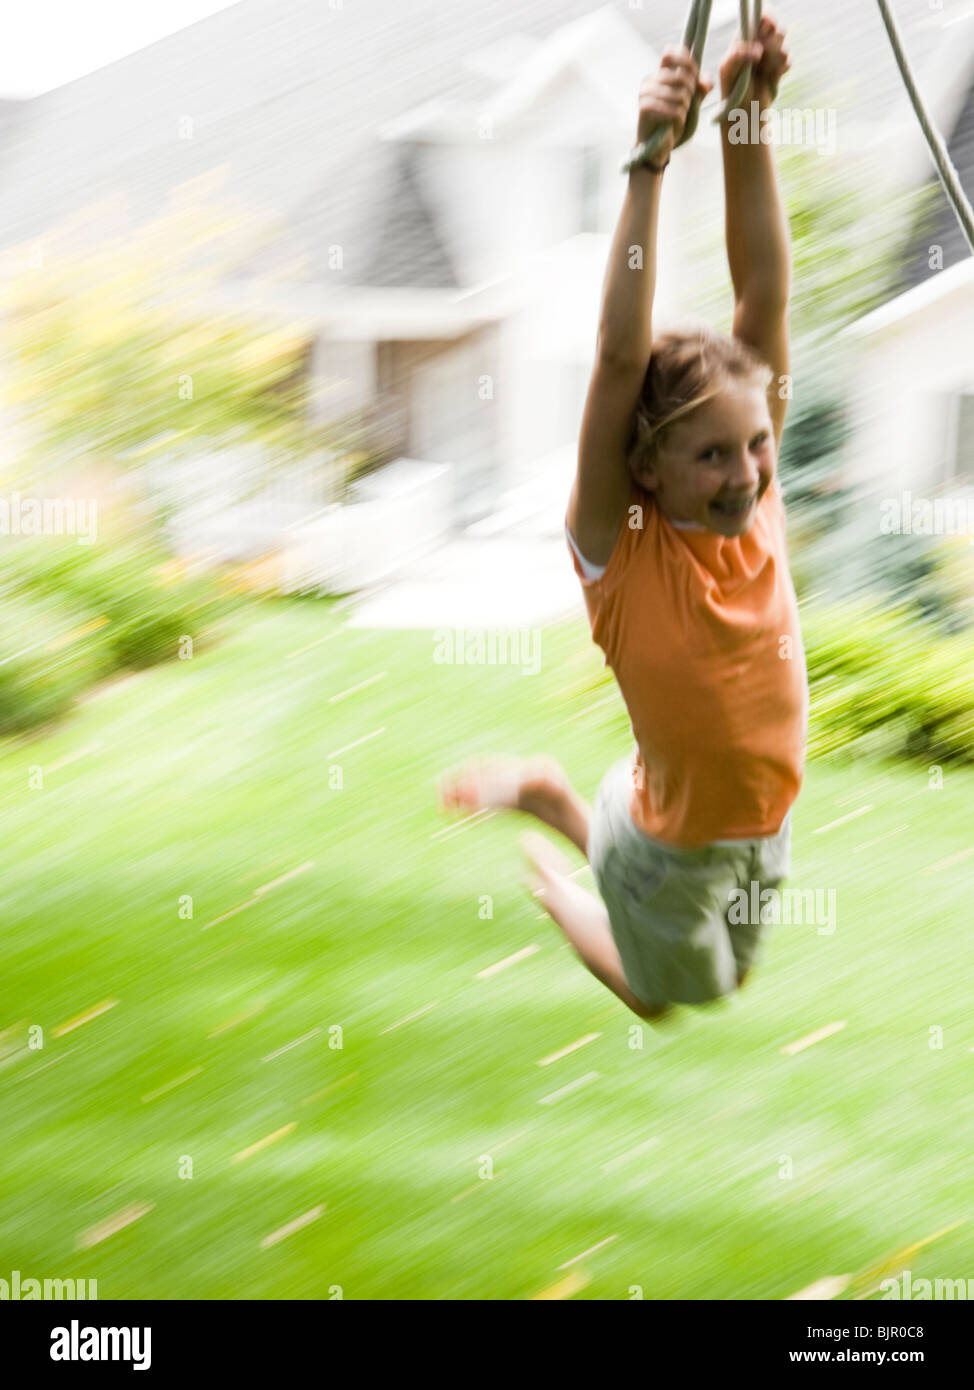 Girl swinging on rope Stock Photo